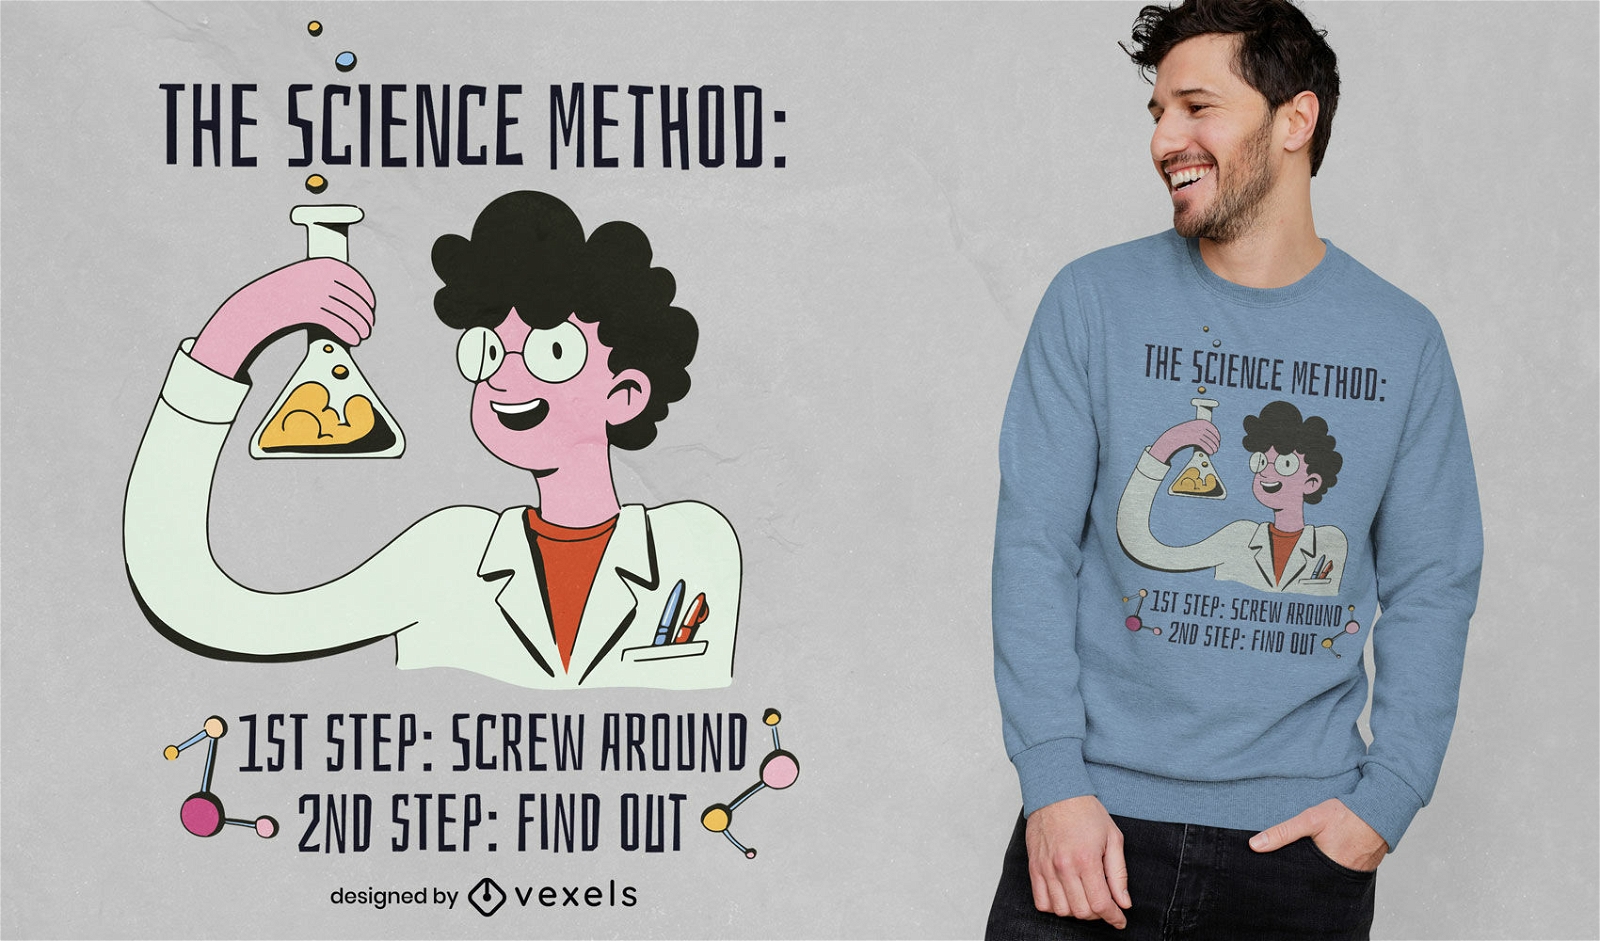 The science method t-shirt design